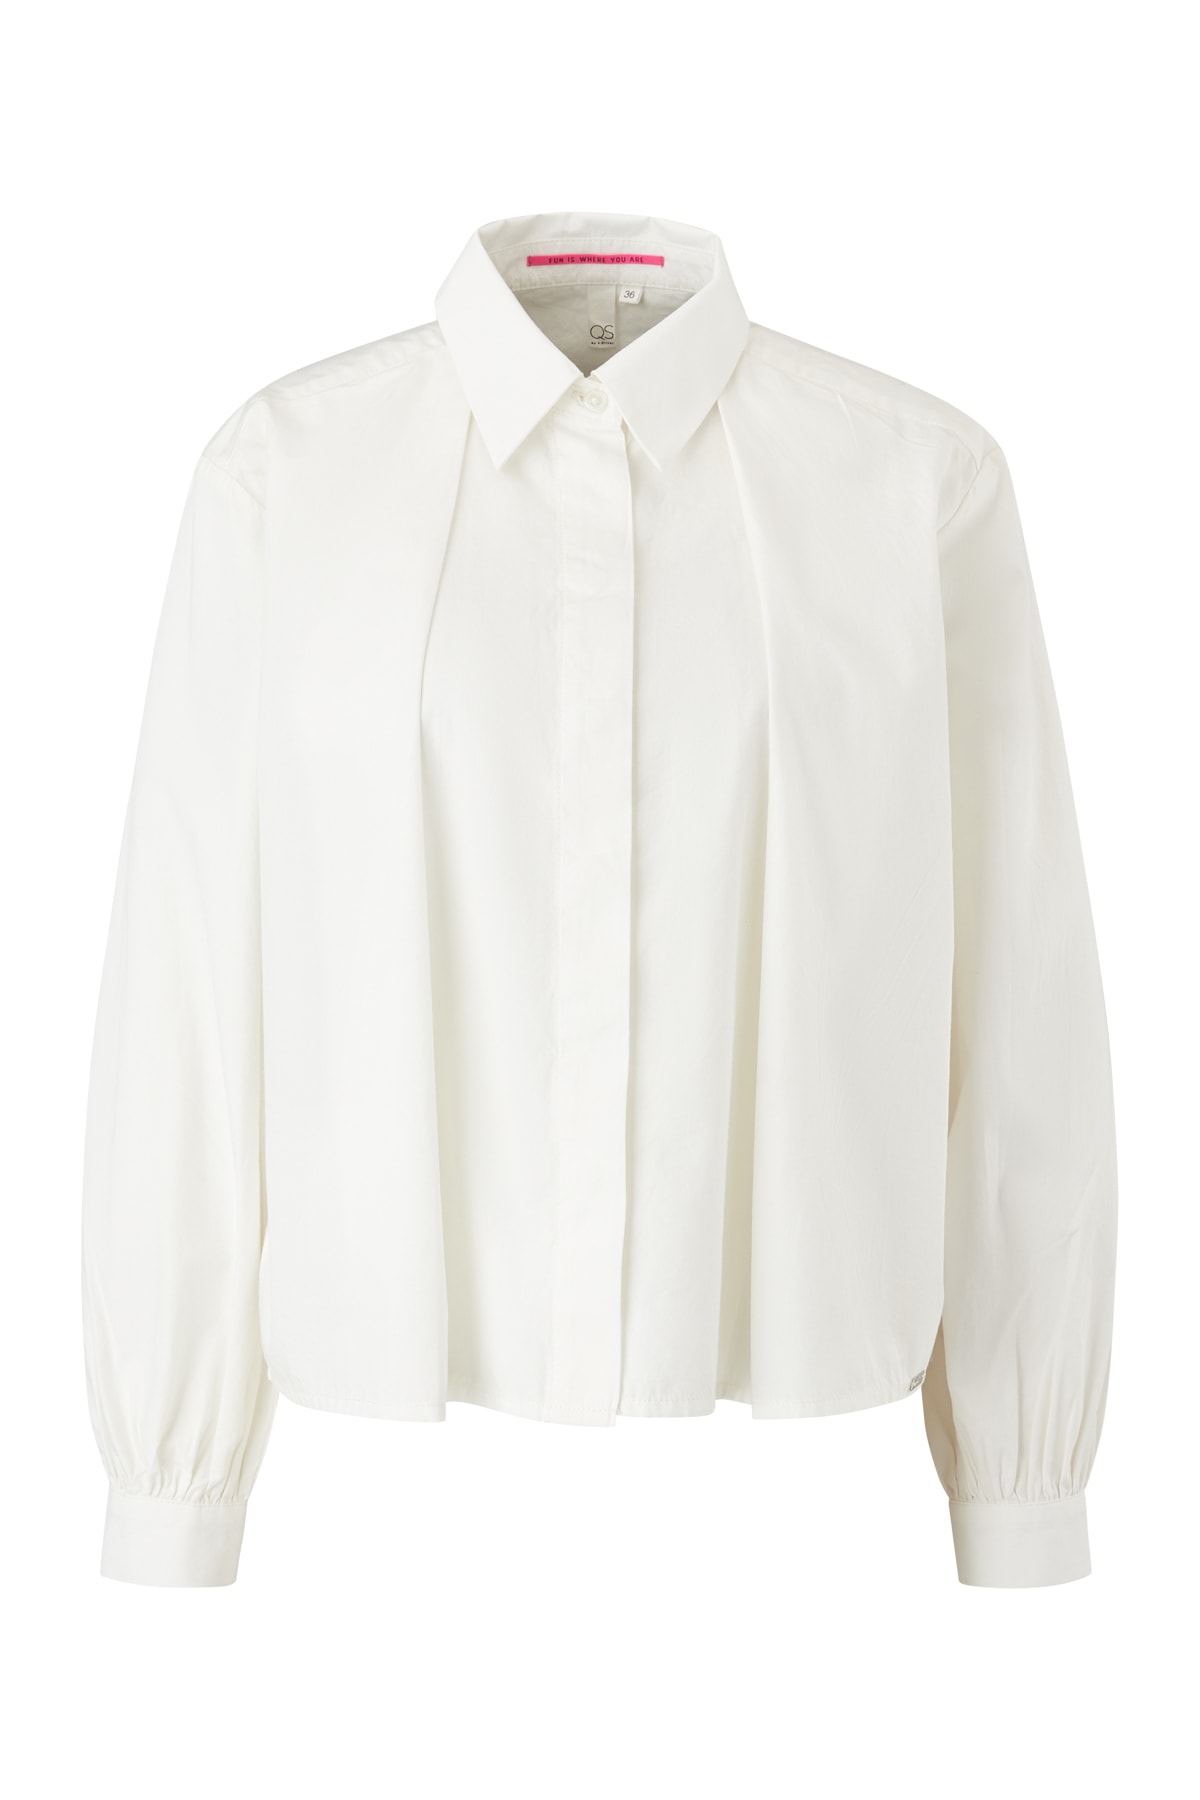 Блузка для женщин/девочек QS by s.Oliver, белый блуза qs by s oliver белый